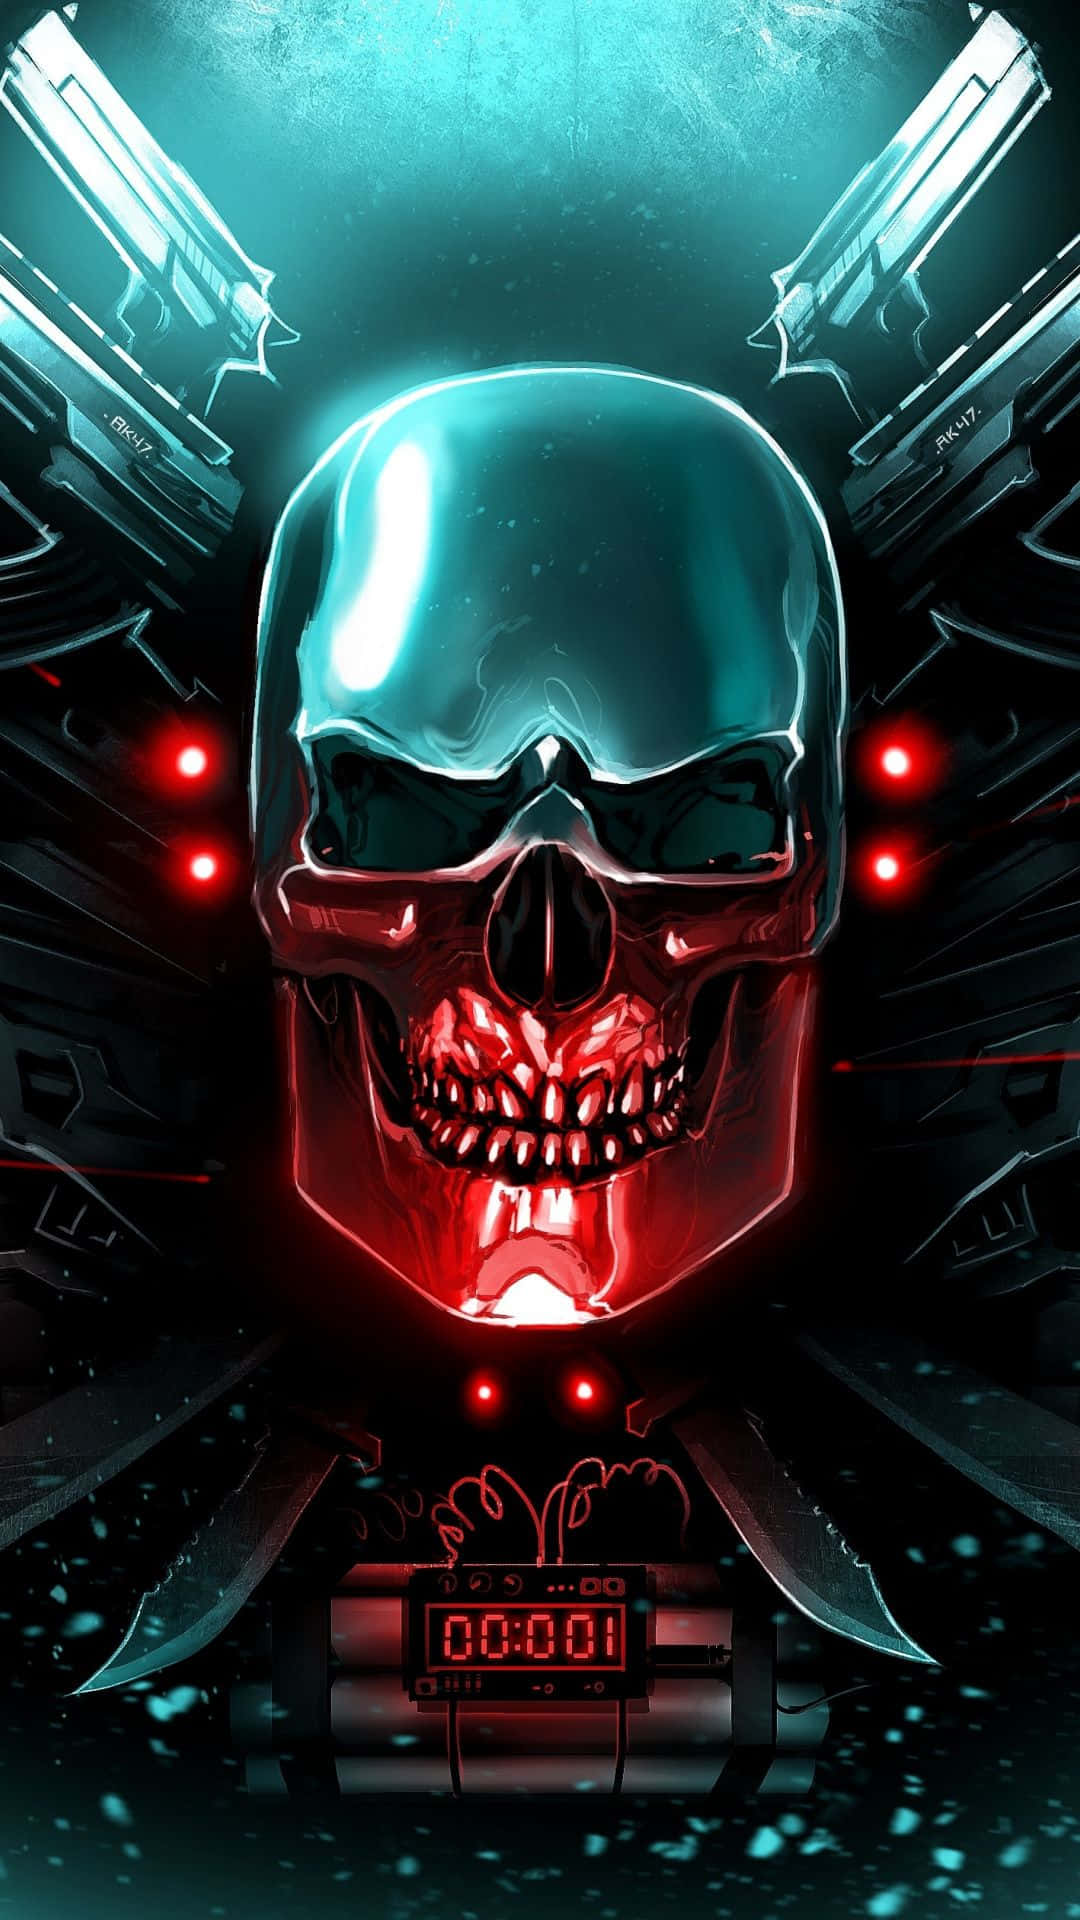 Robot Skull And Crossbones Background